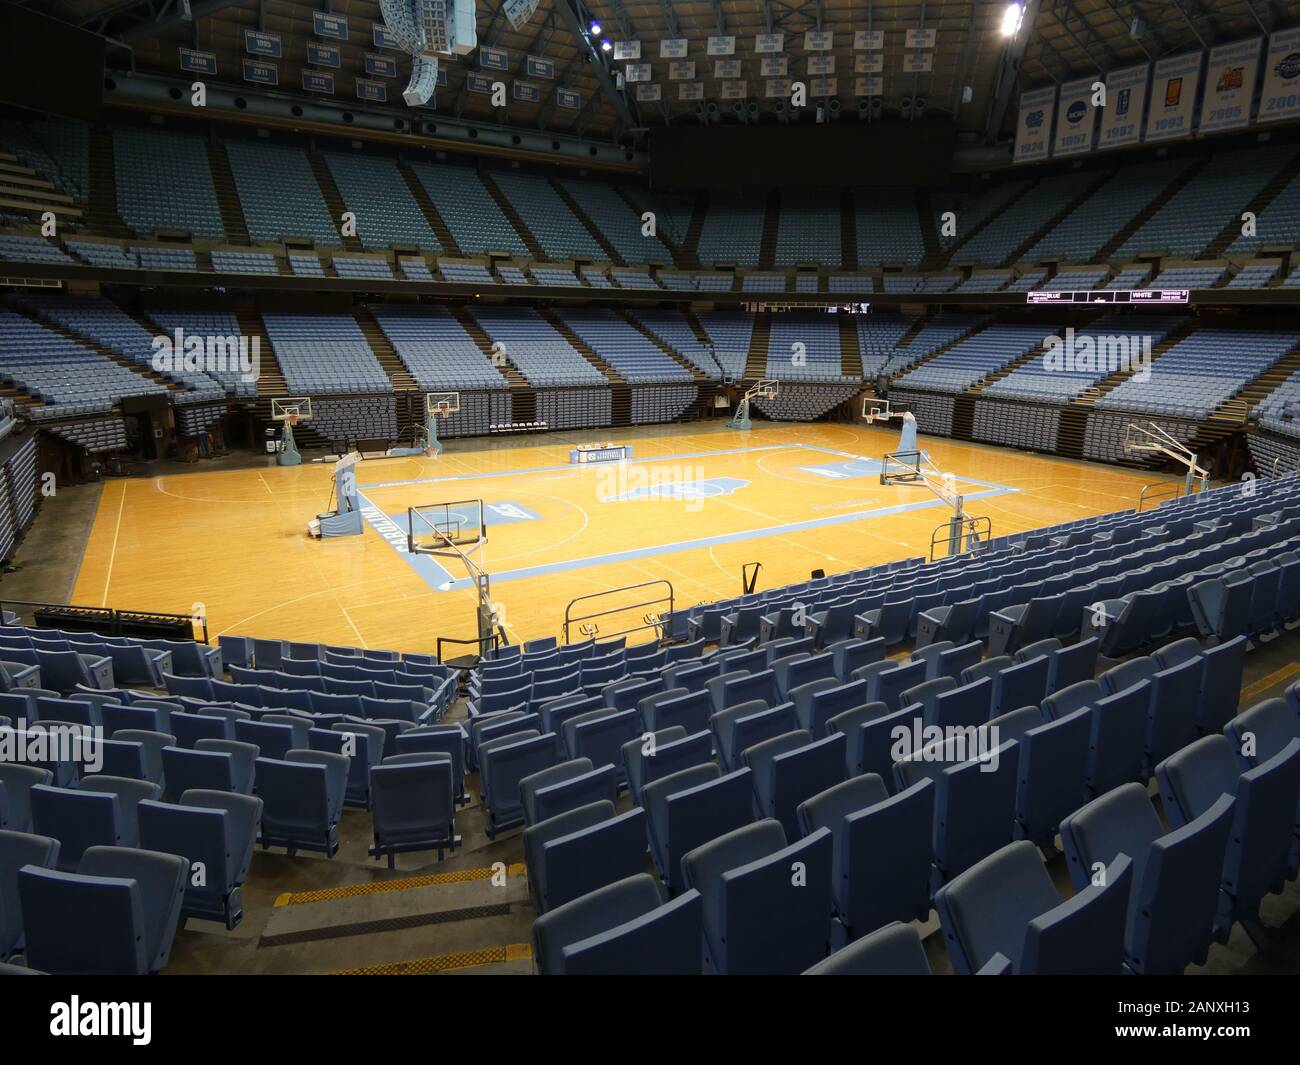 Chapel hill, North Carolina April 5, 2019: UNC Basketball court Photo Stock Photo